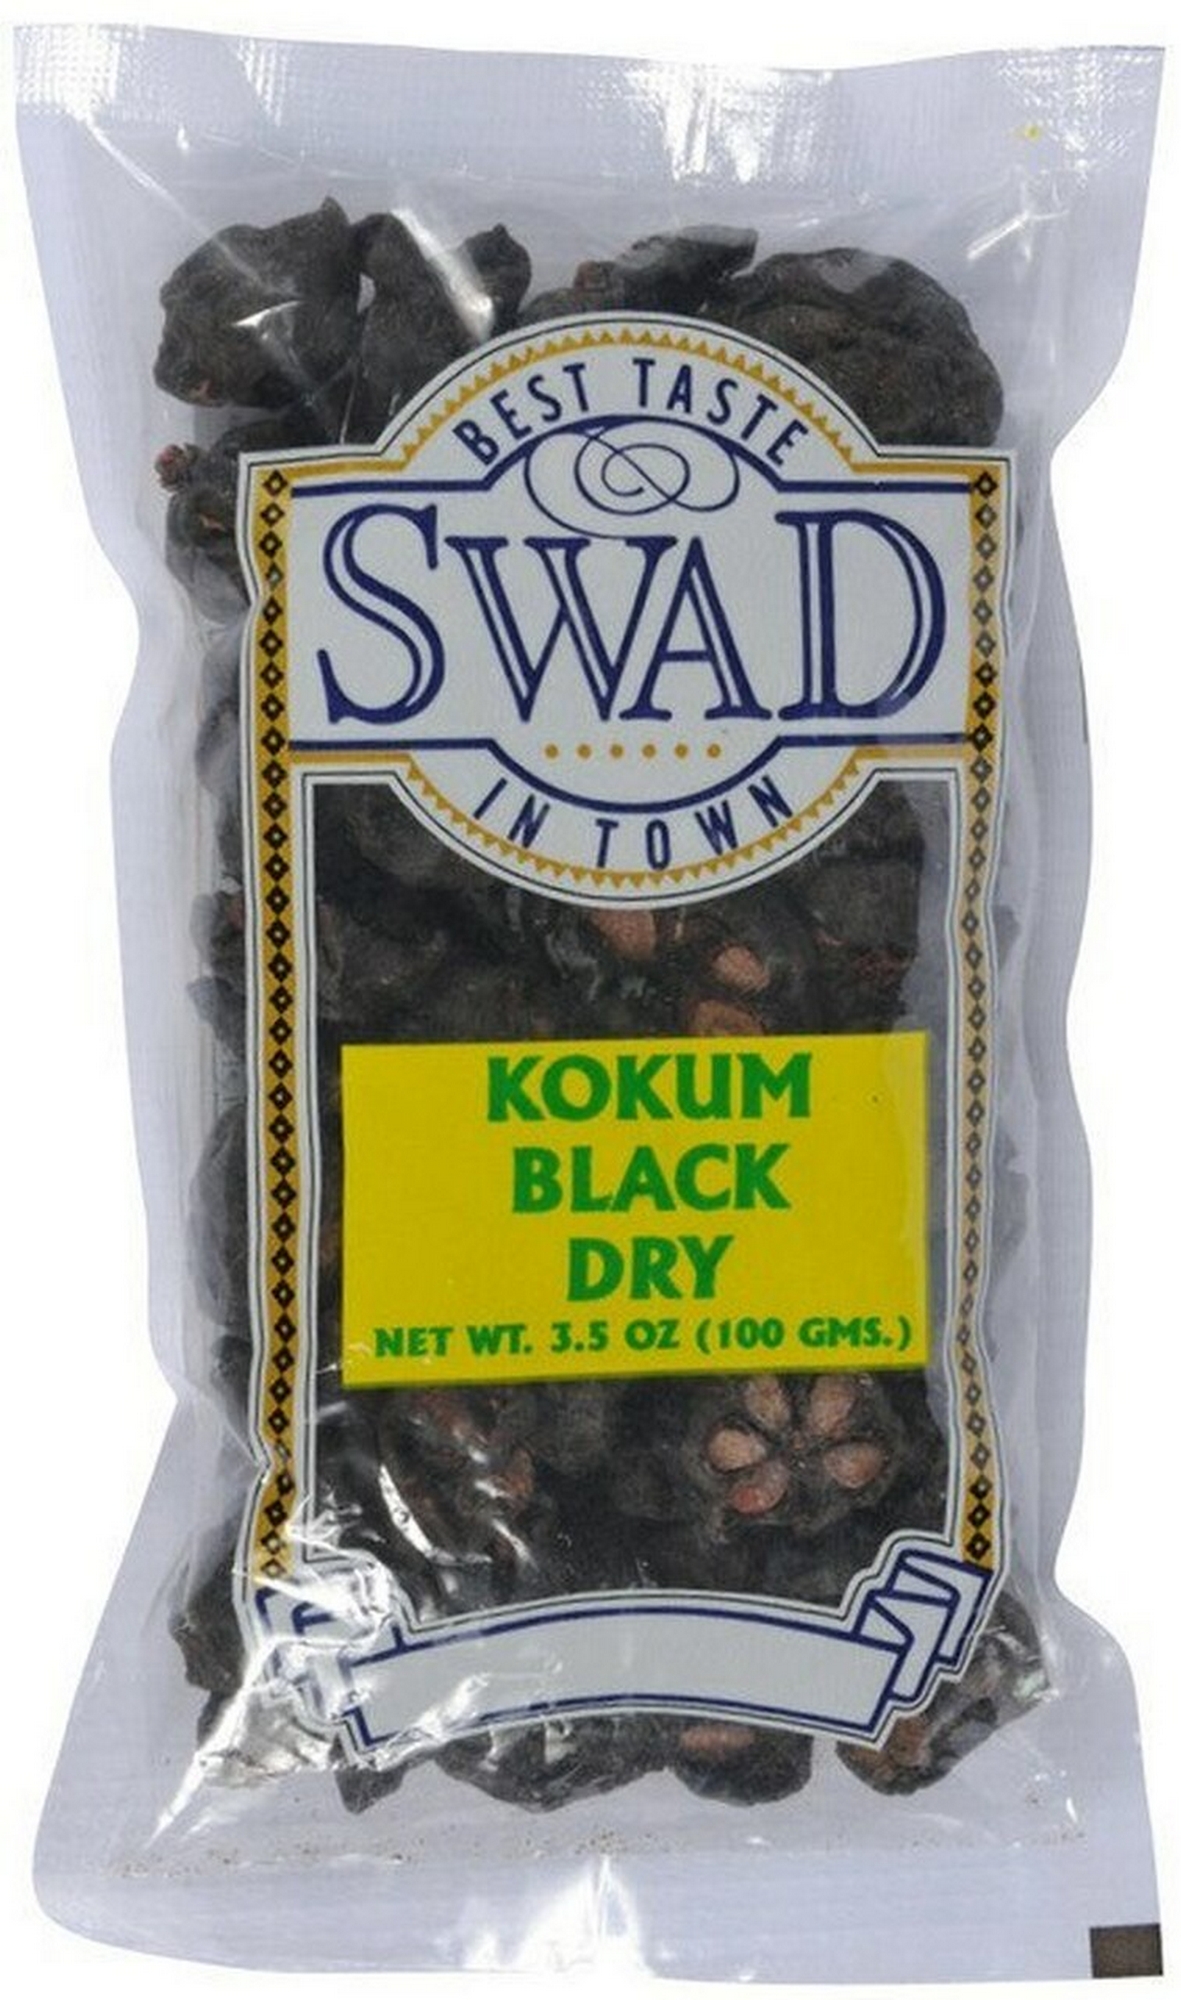 SWAD Kokum Black Dry - 3.5oz (100g) - image 5 of 6